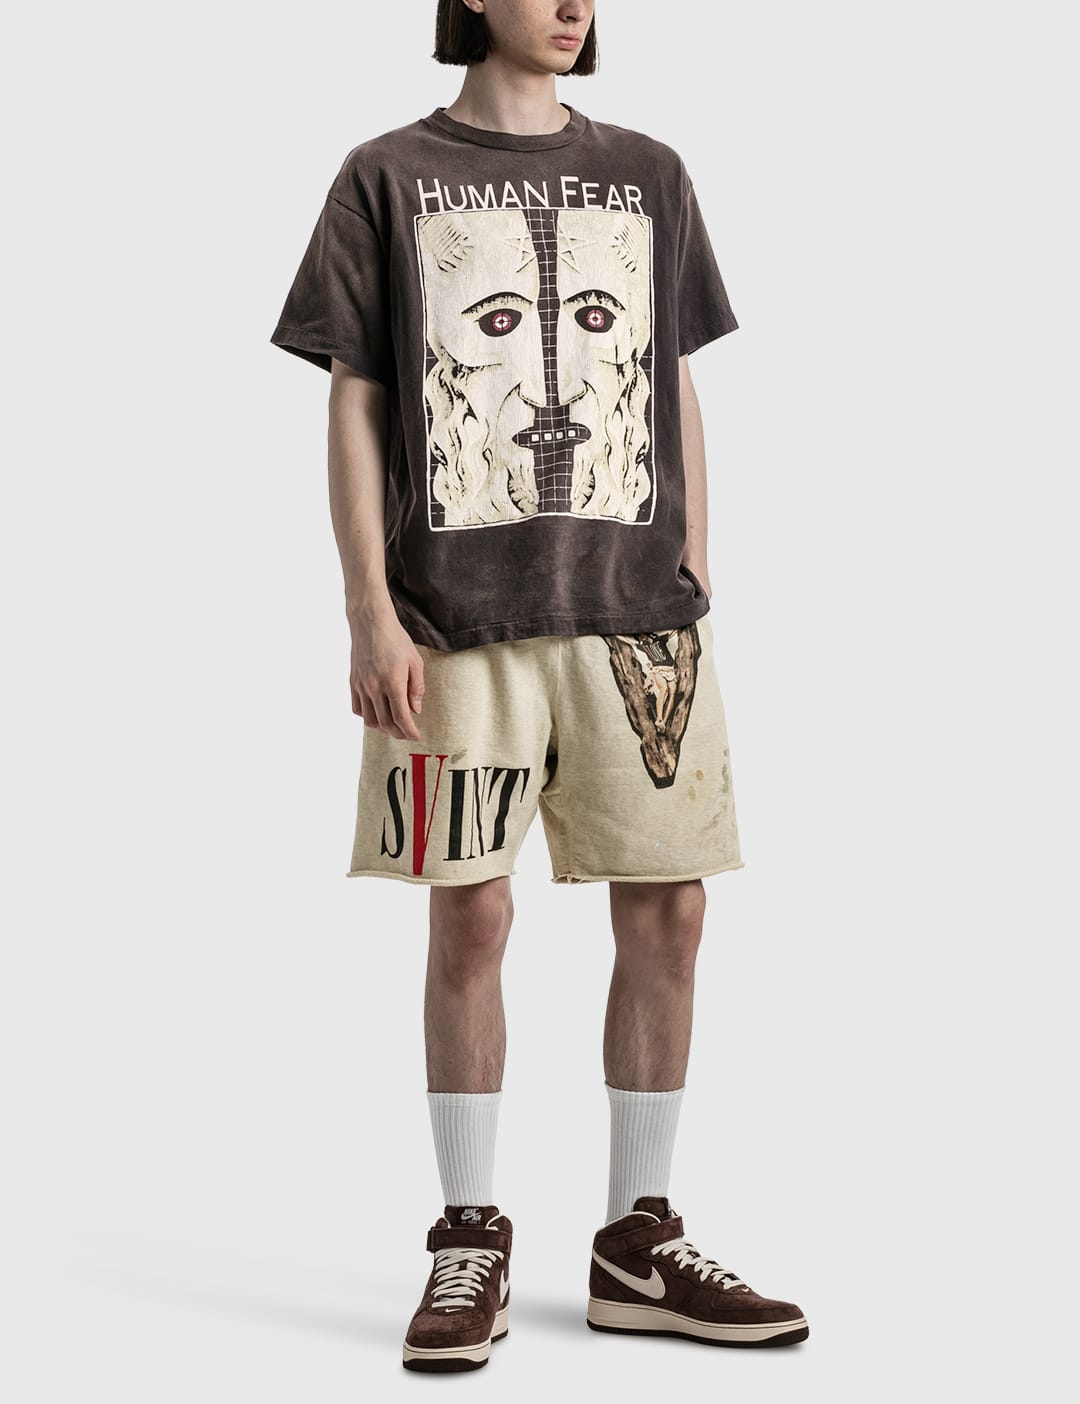 Saint Michael - Human Fear T-shirt | HBX - HYPEBEAST 为您搜罗全球